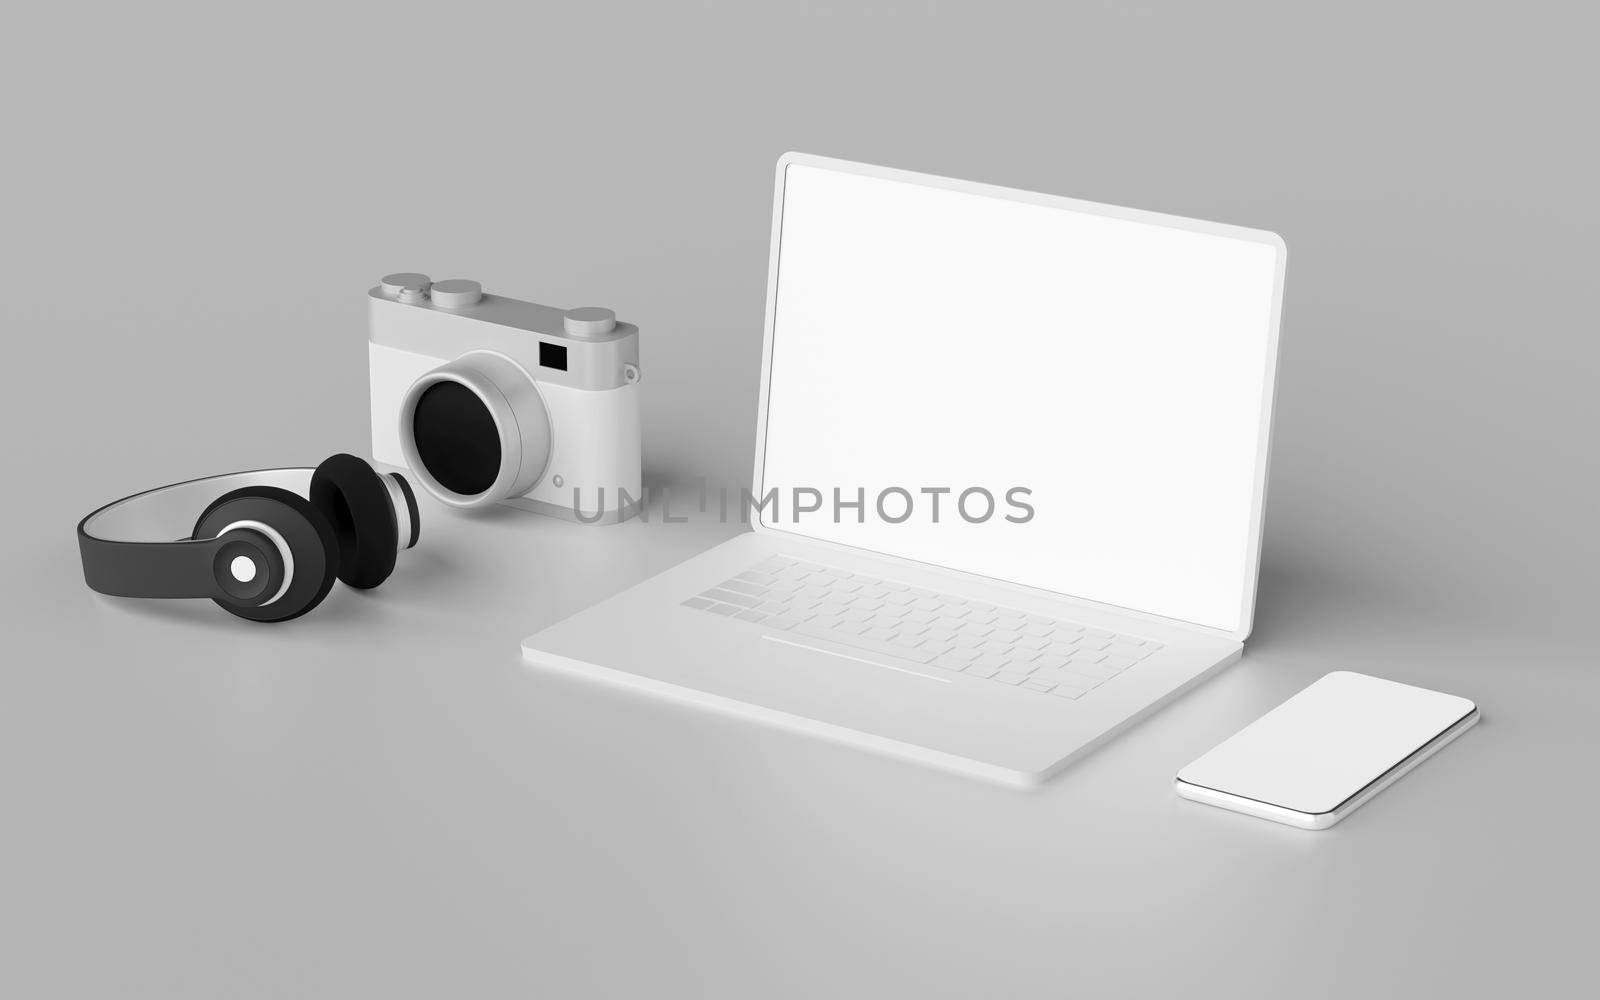 Minimalistic camera headphone, laptop, smartphone with blank screen mockup, 3d rendering by nutzchotwarut